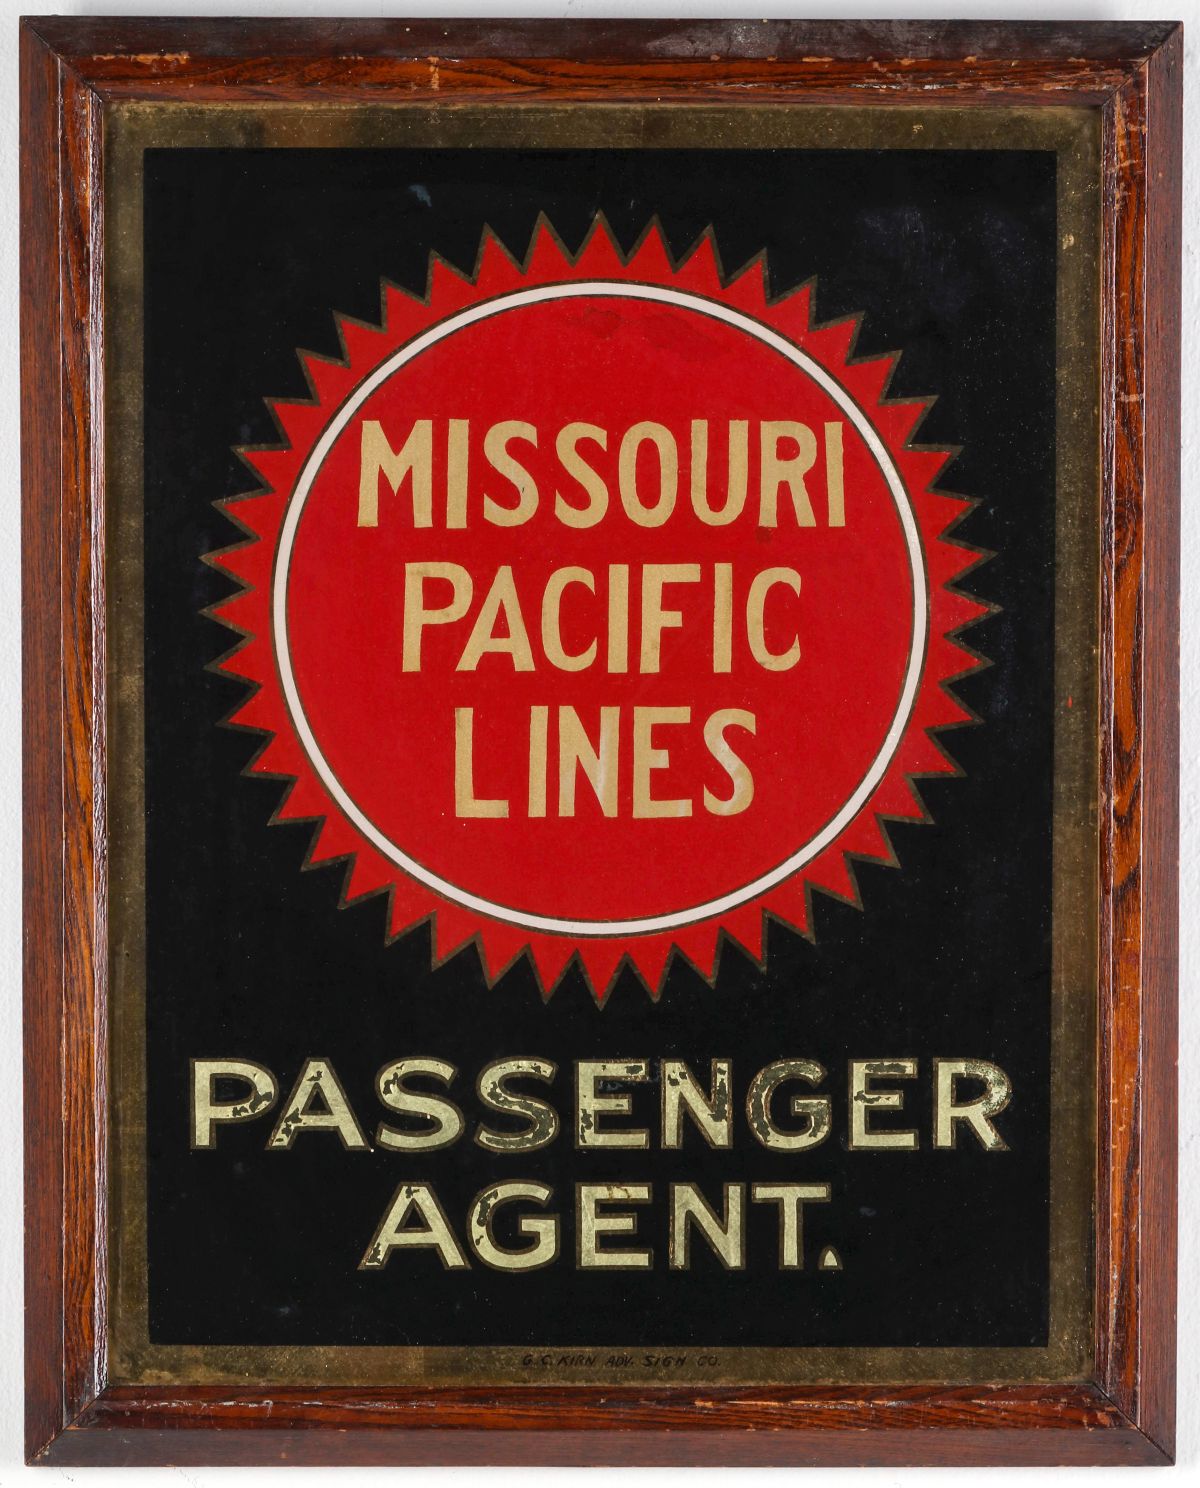 A MISSOURI PACIFIC LINES PASSENGER AGENT SIGN C. 1910